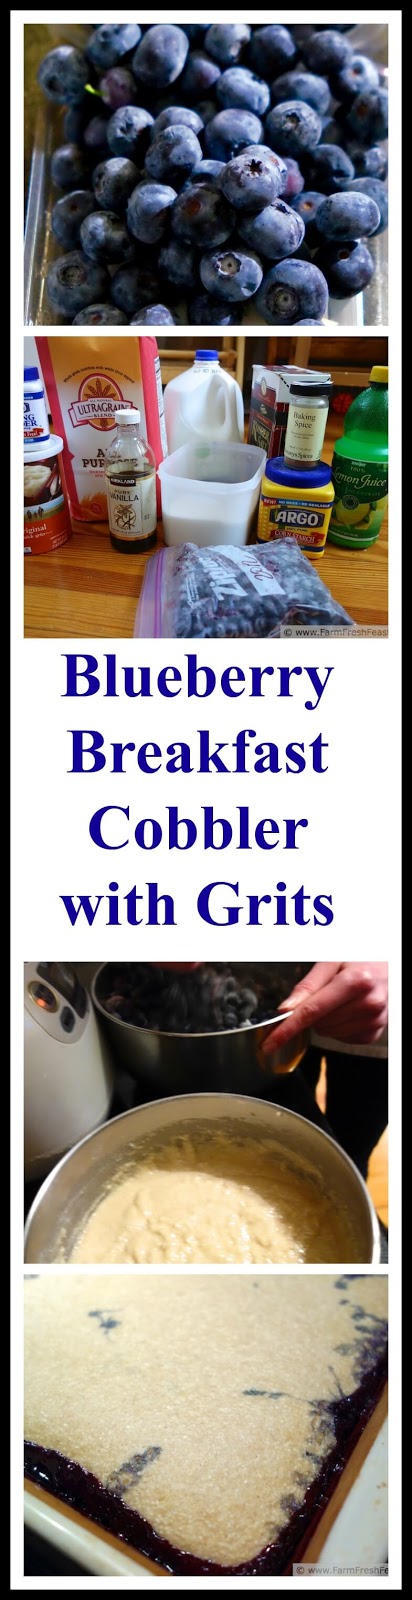 http://www.farmfreshfeasts.com/2015/08/blueberry-breakfast-cobbler-with-grits.html